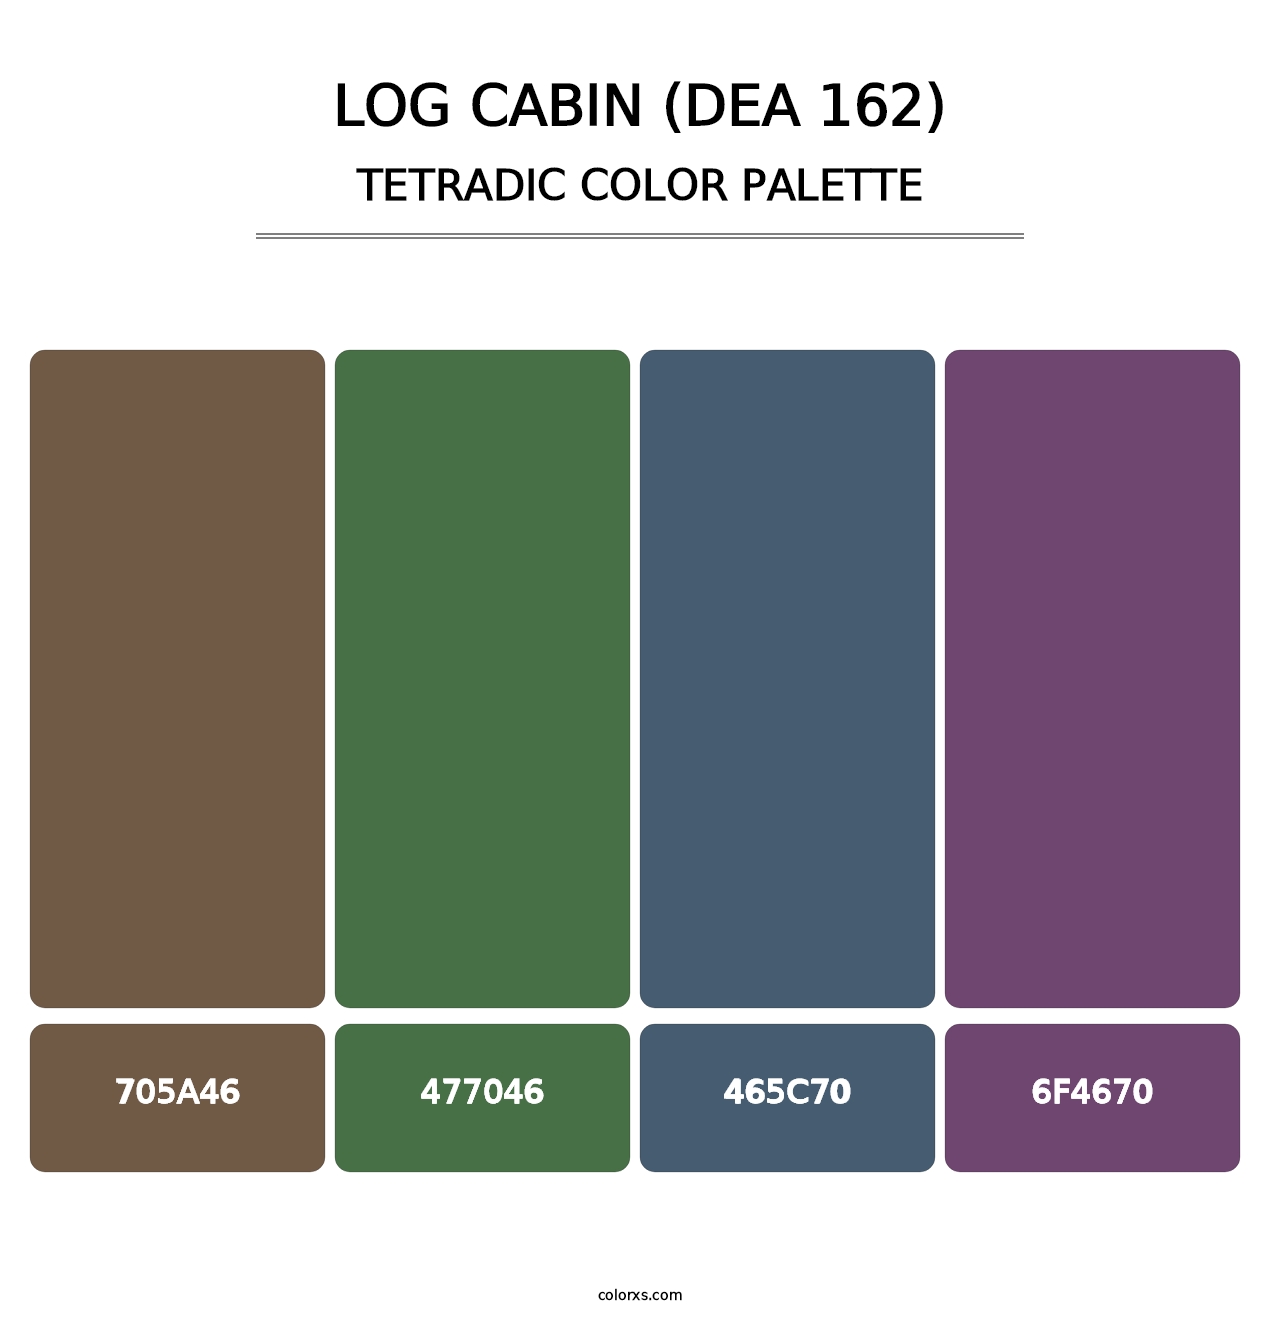 Log Cabin (DEA 162) - Tetradic Color Palette